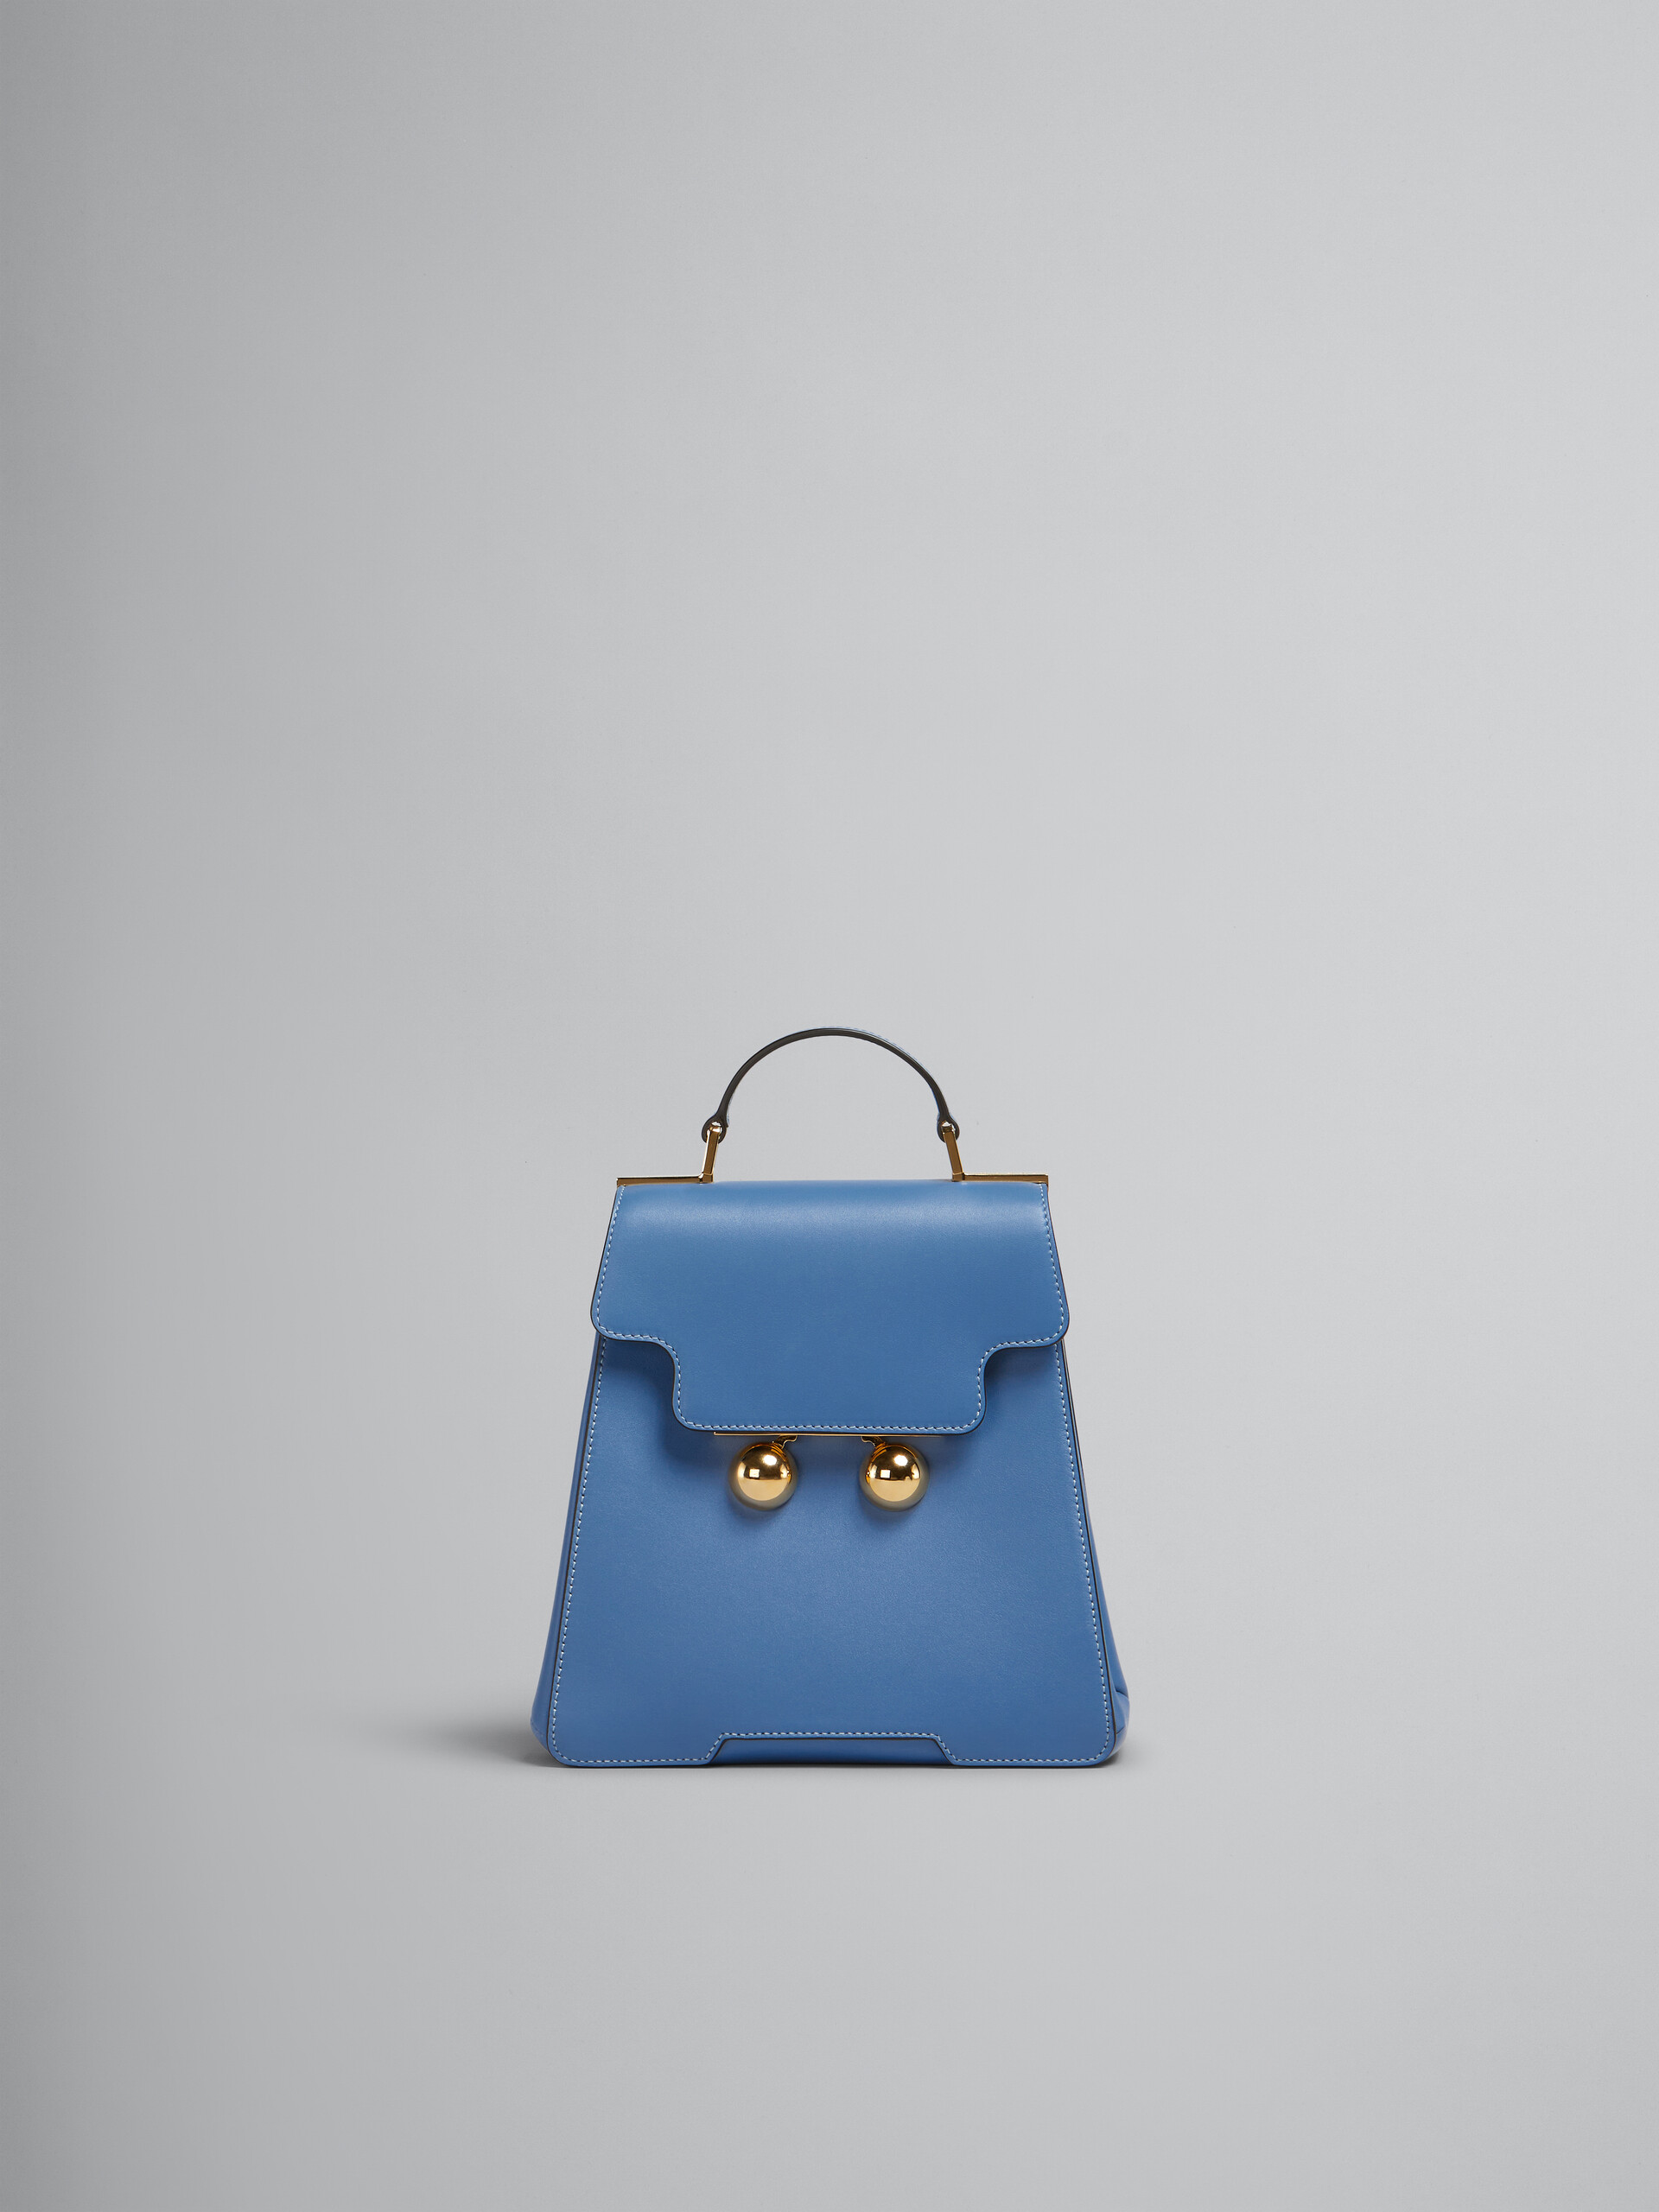 Blue leather Trunkaroo backpack - Backpack - Image 1